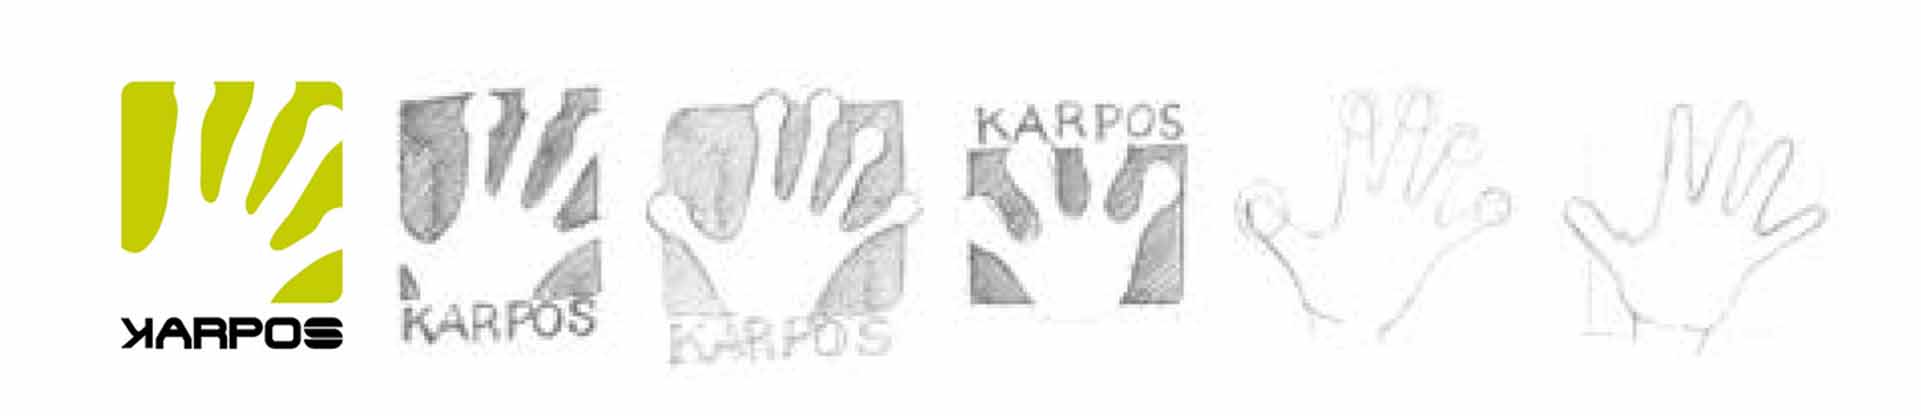 Explore more about logo Karpos